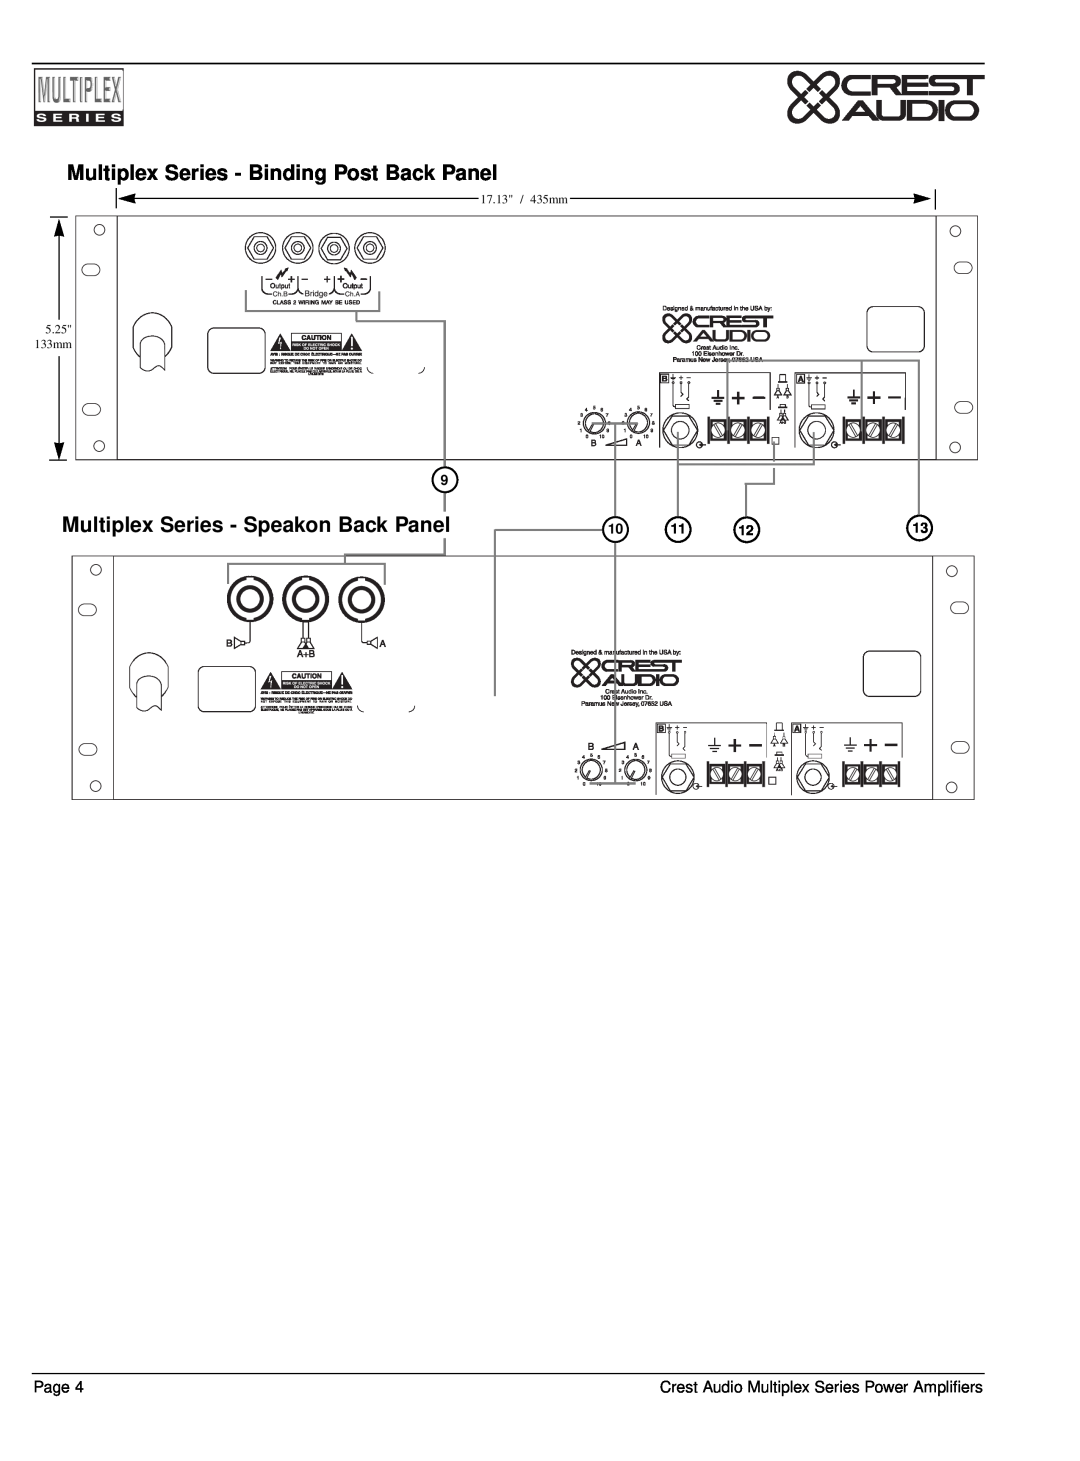 Peavey Multiplex Series - Binding Post Back Panel, Multiplex Series - Speakon Back Panel, Page, 17.13 / 435mm 